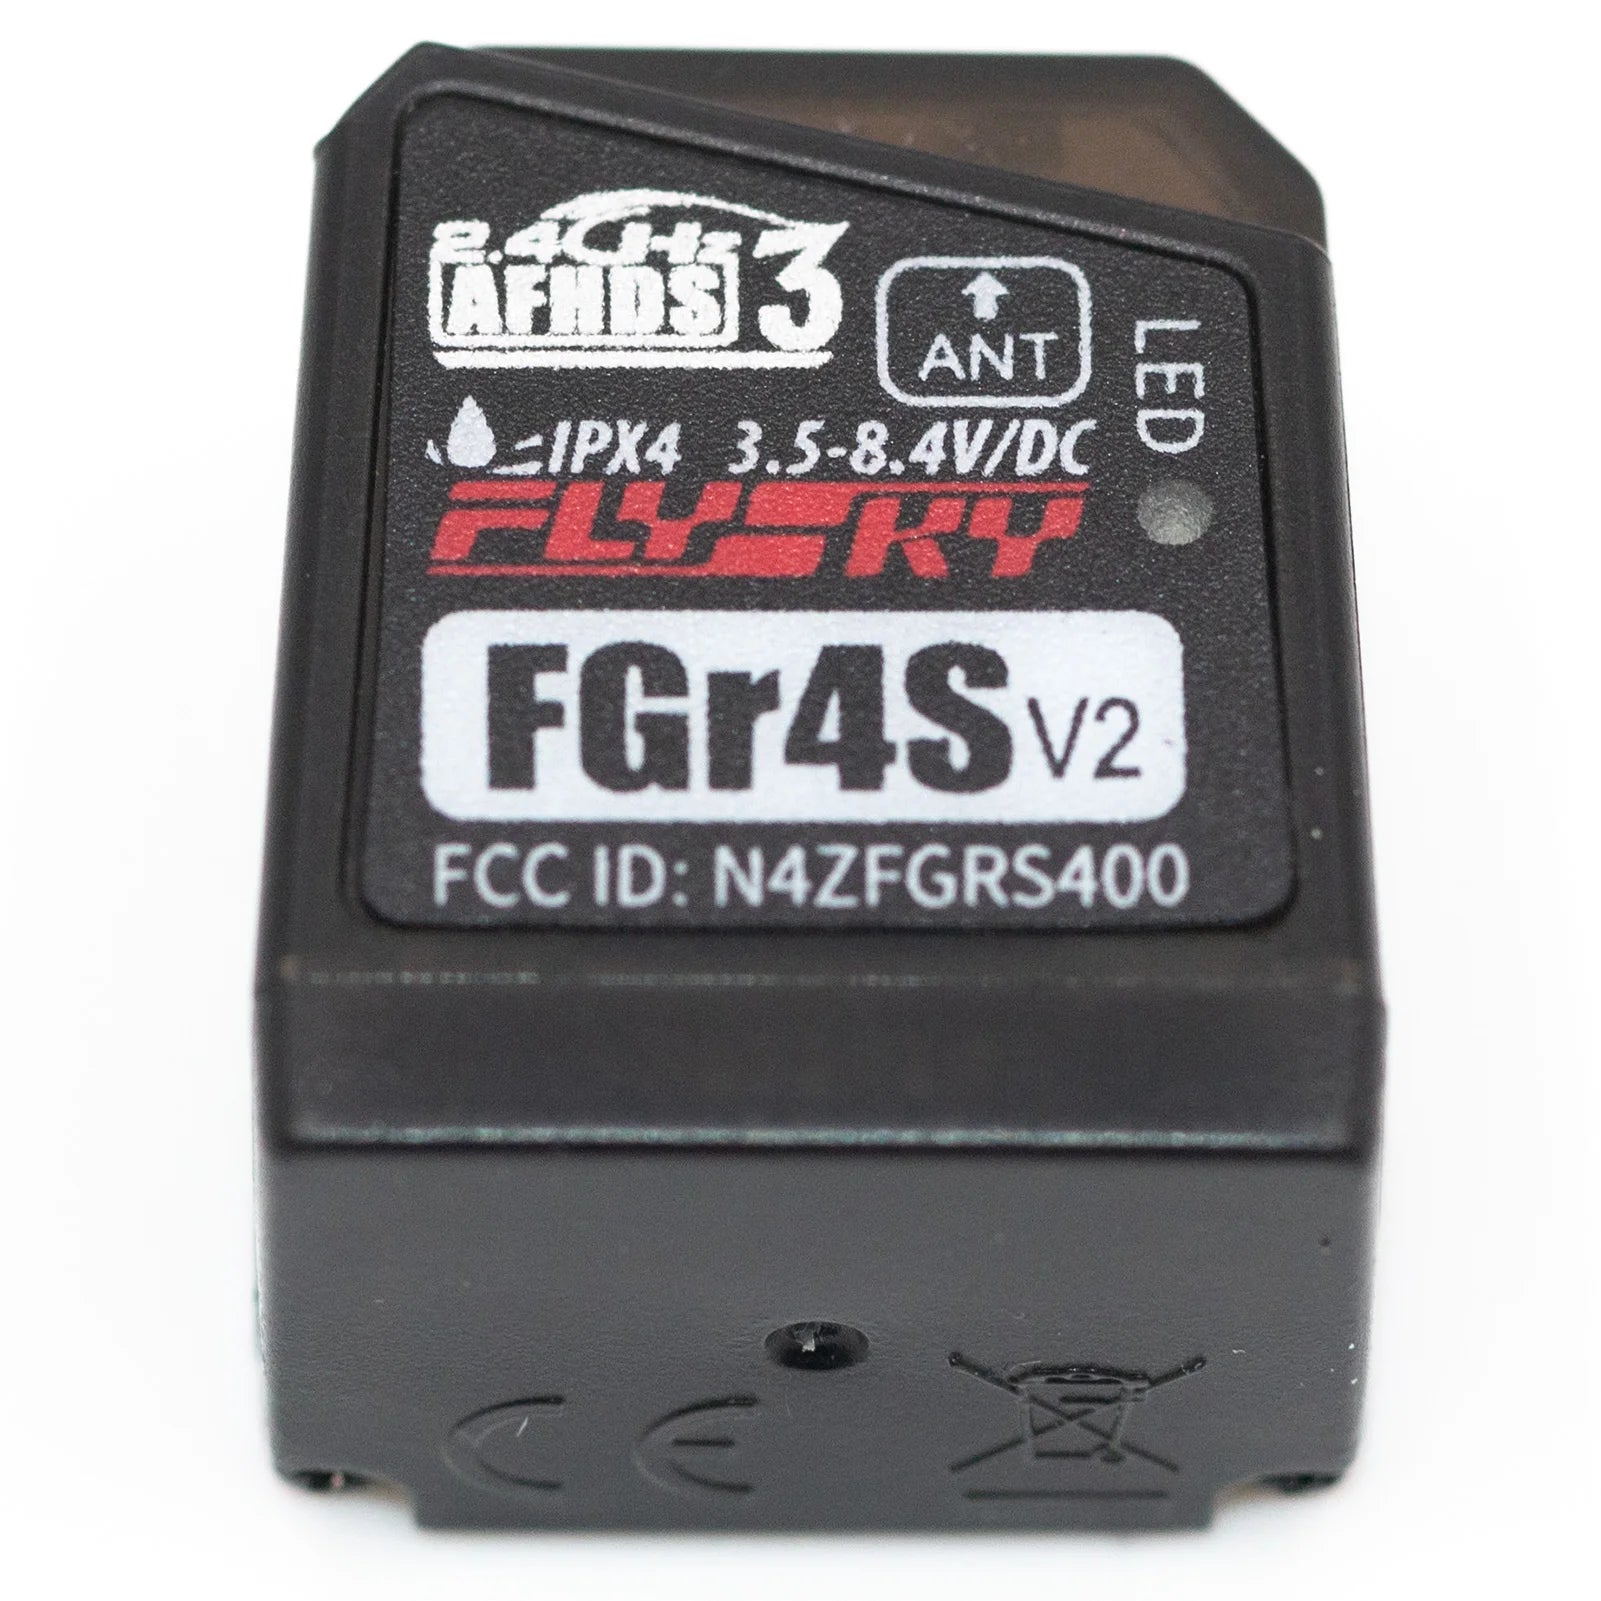 Flysky FGR4S V2 Receiver, EIPX4 3.5-8.4V/DC ZLSRT FGr4S